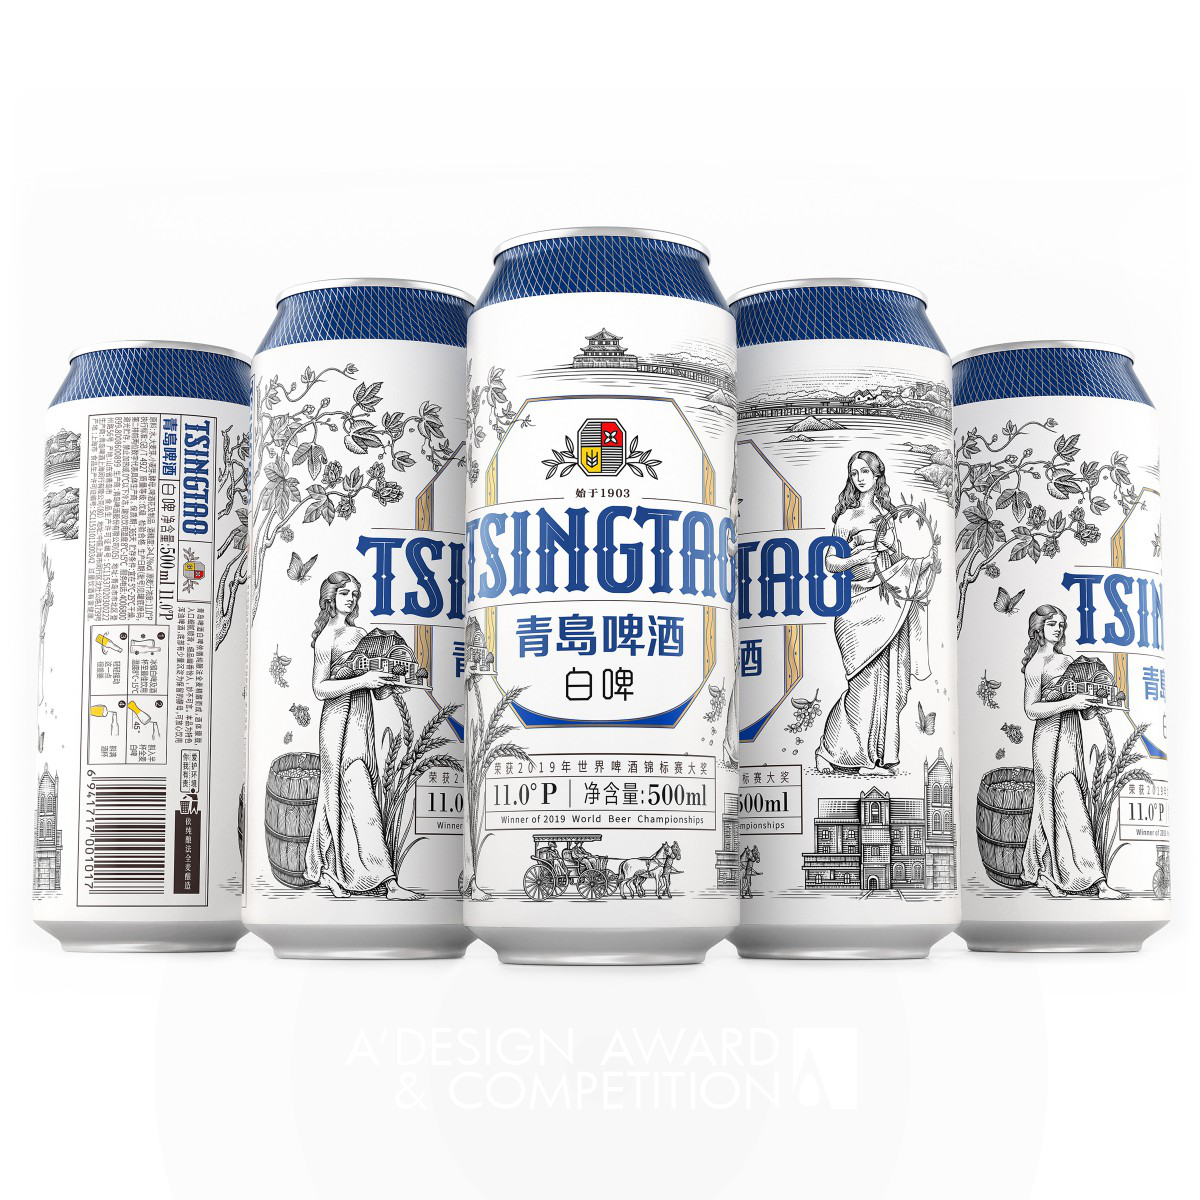 Tsingtao White Beer by TIGER PAN